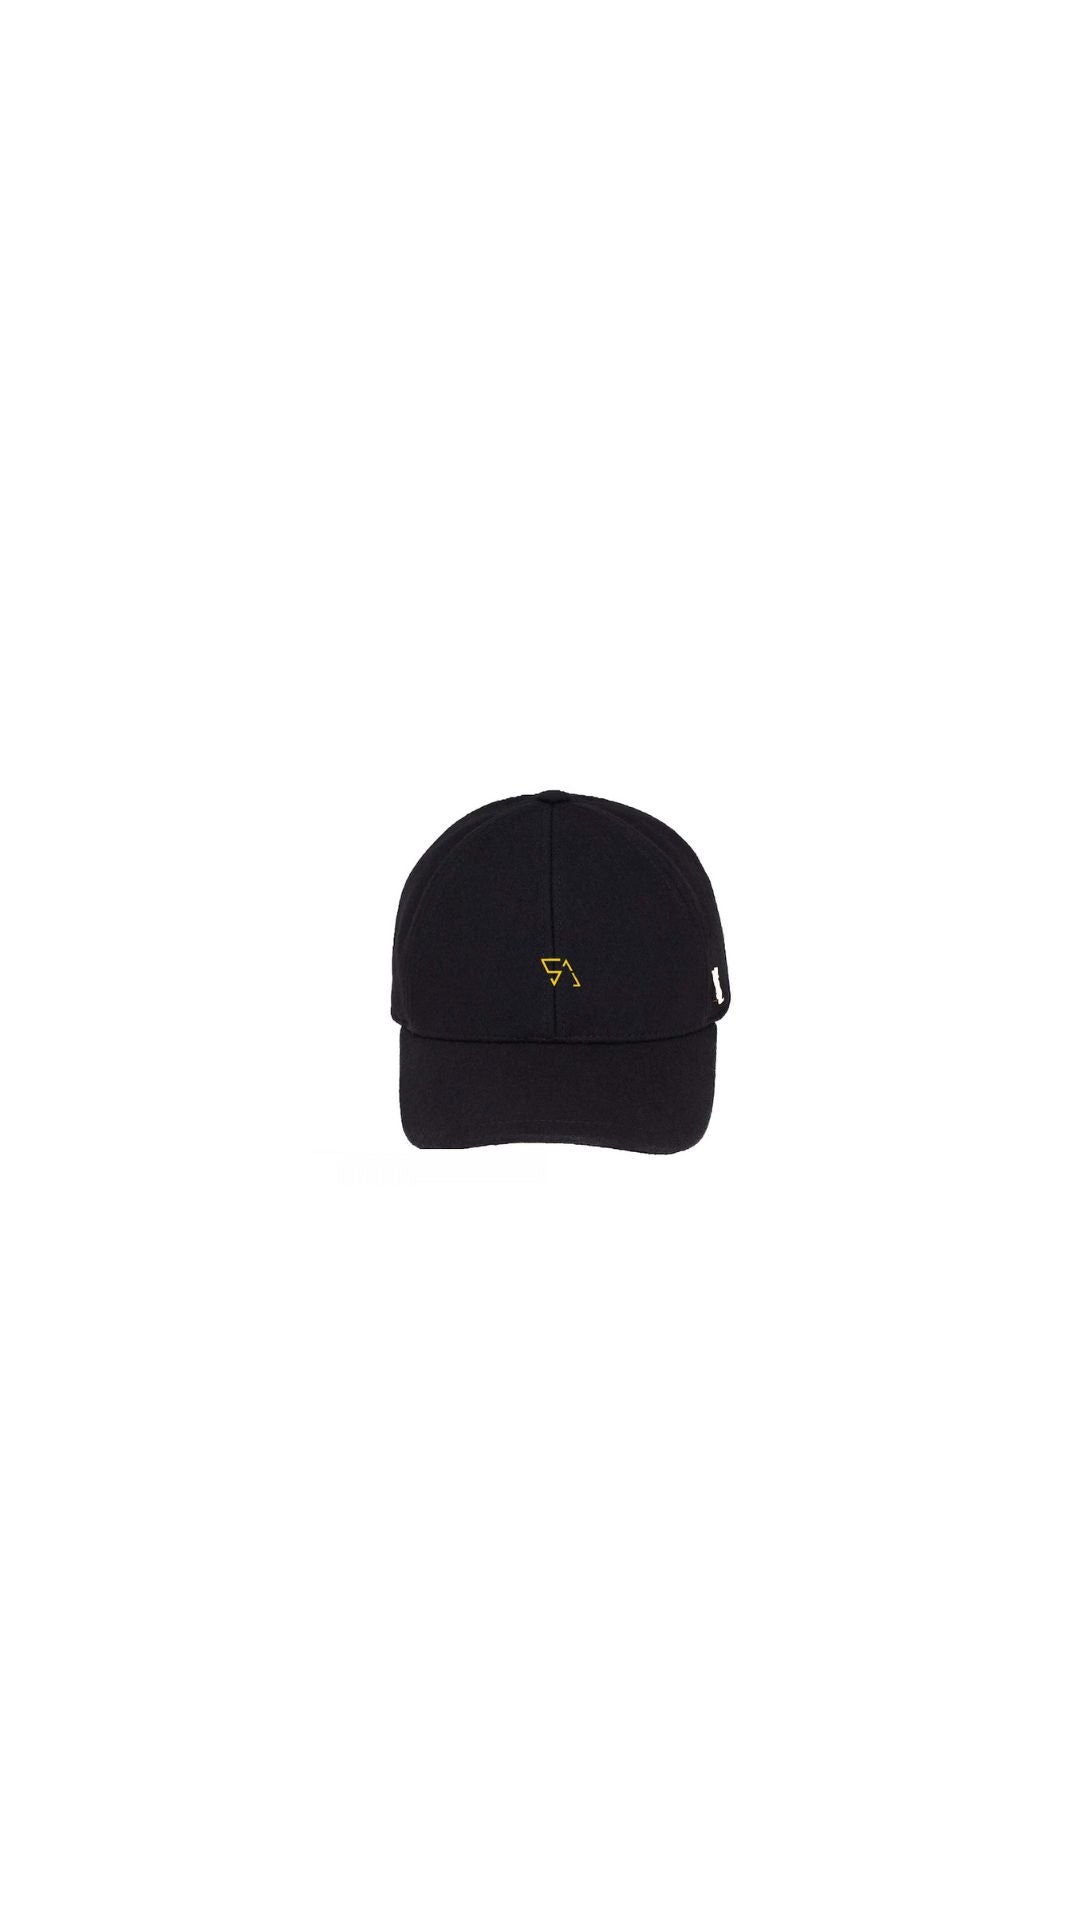 SAXSV BLACK AND YELLOW HAT